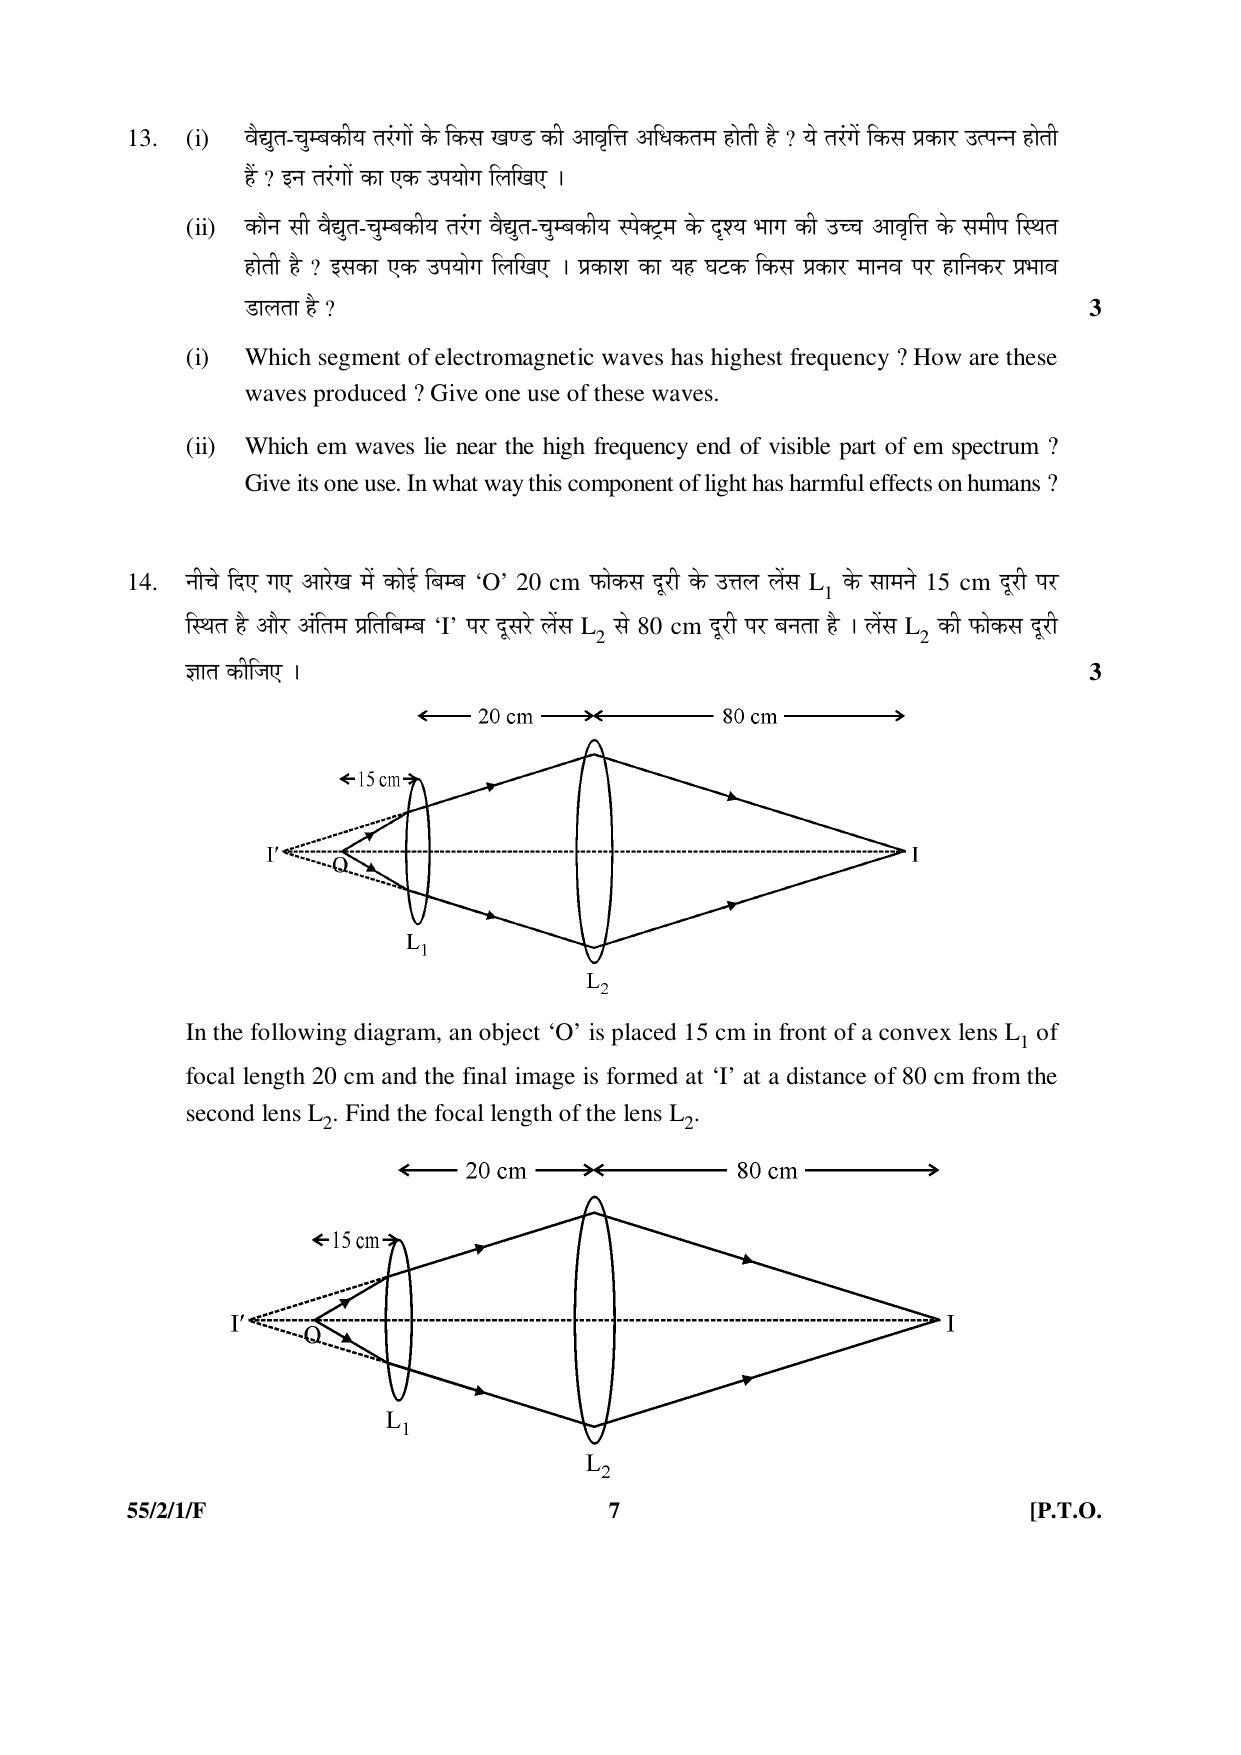 CBSE Class 12 55-2-1-F _Physics_SET-1 2016 Question Paper - Page 7